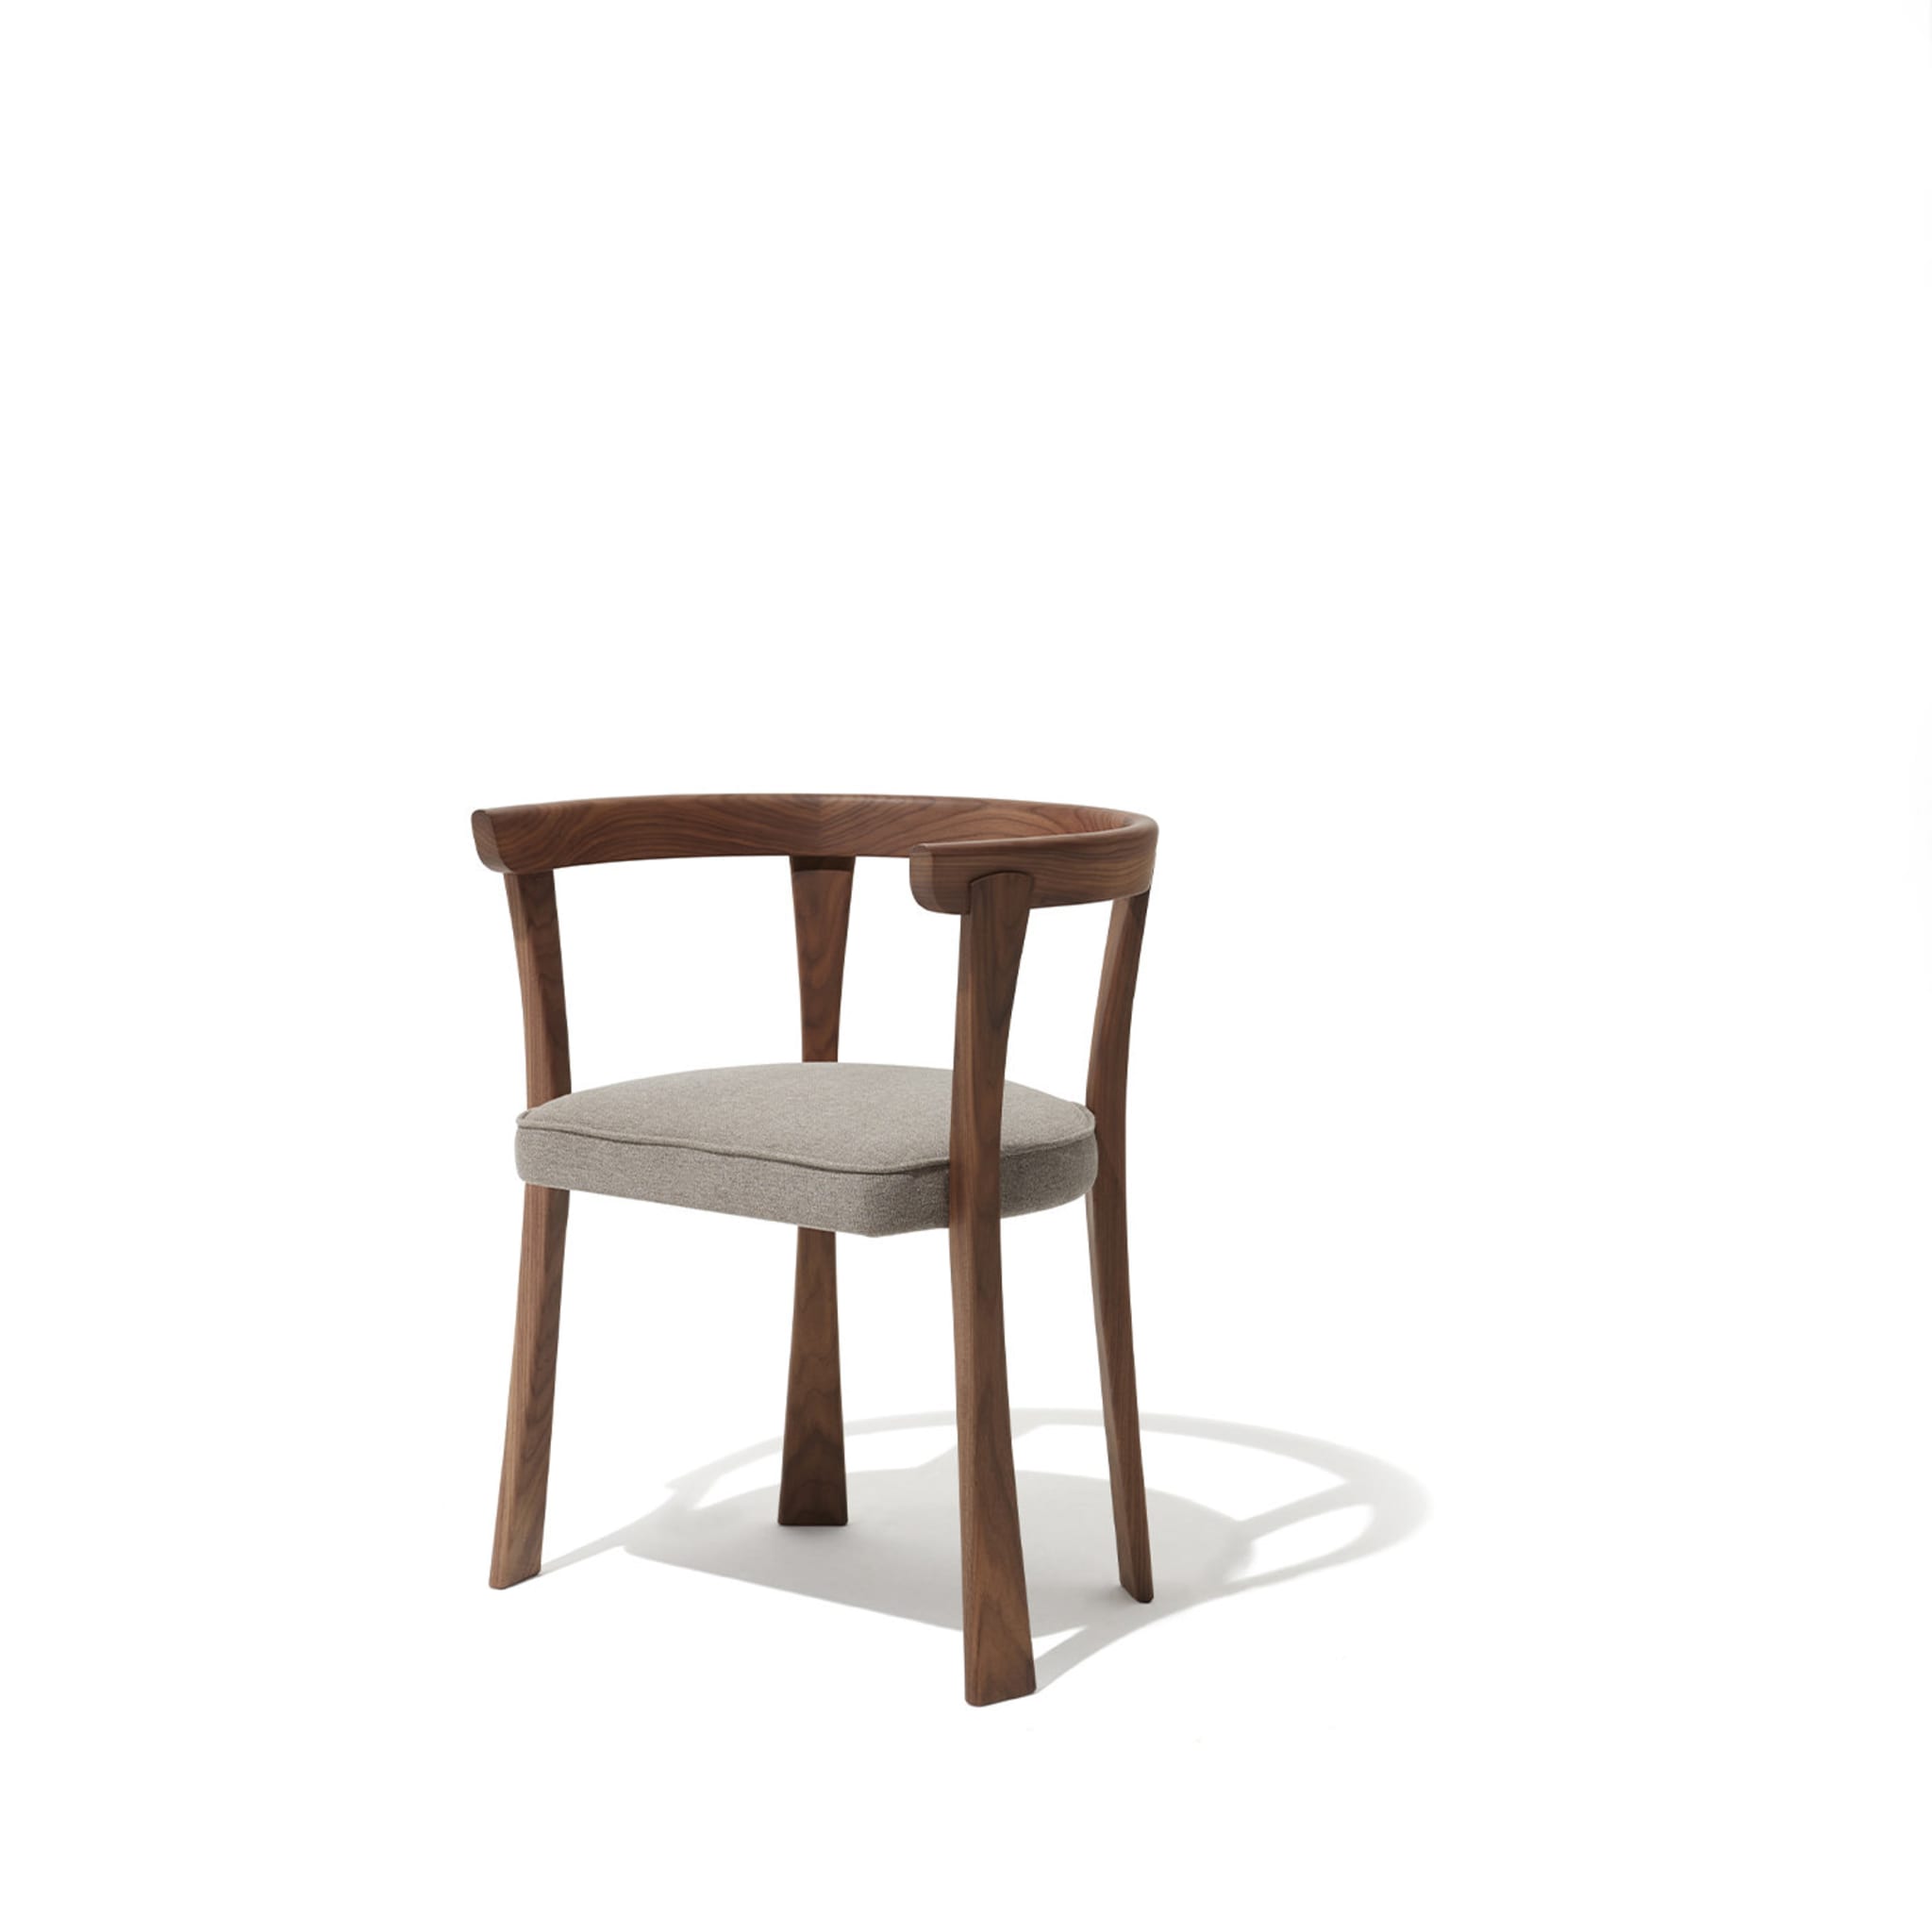 Padded Floridita Chair - Alternative view 1